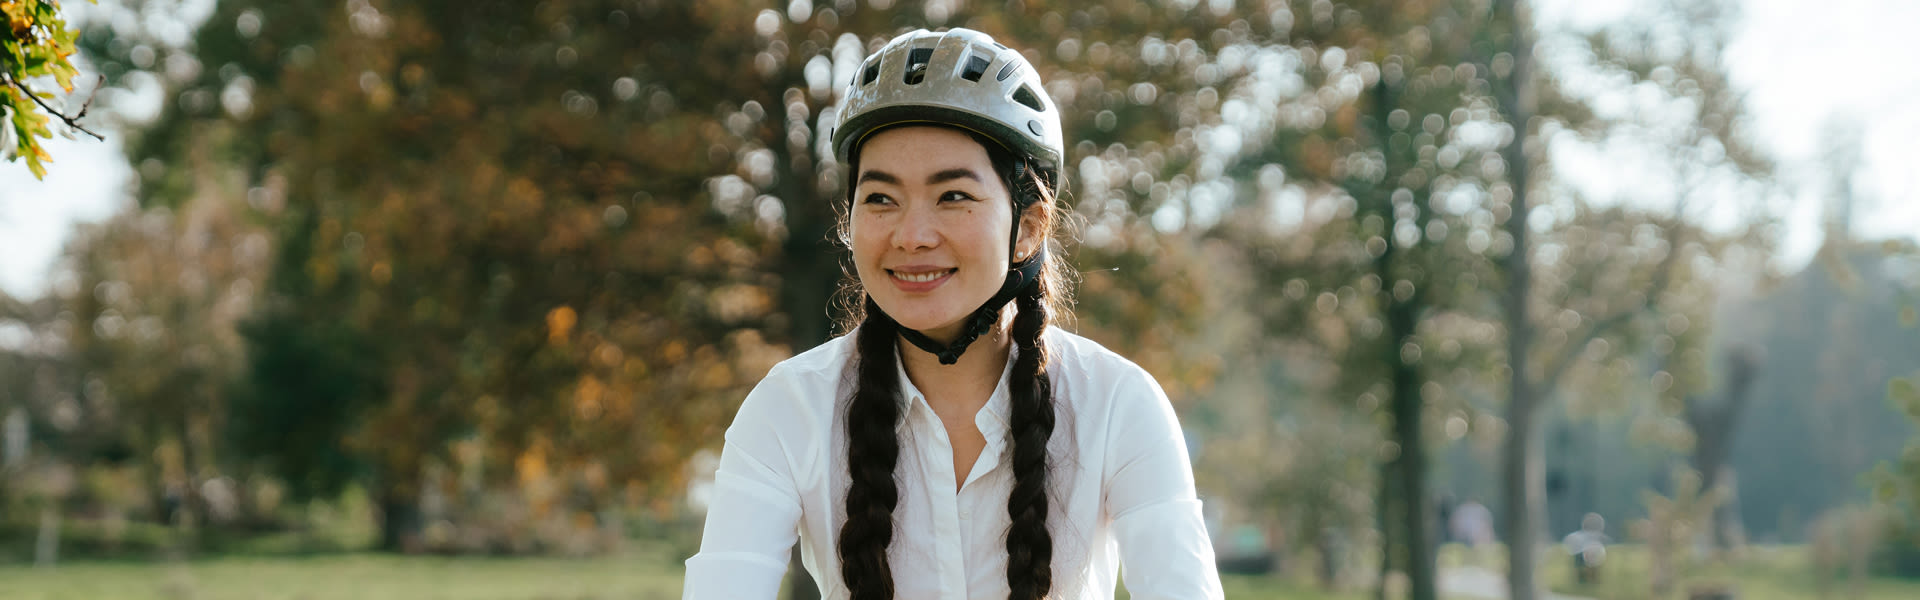 Safety Meets Style: Bike Helmet-Friendly Hairstyles